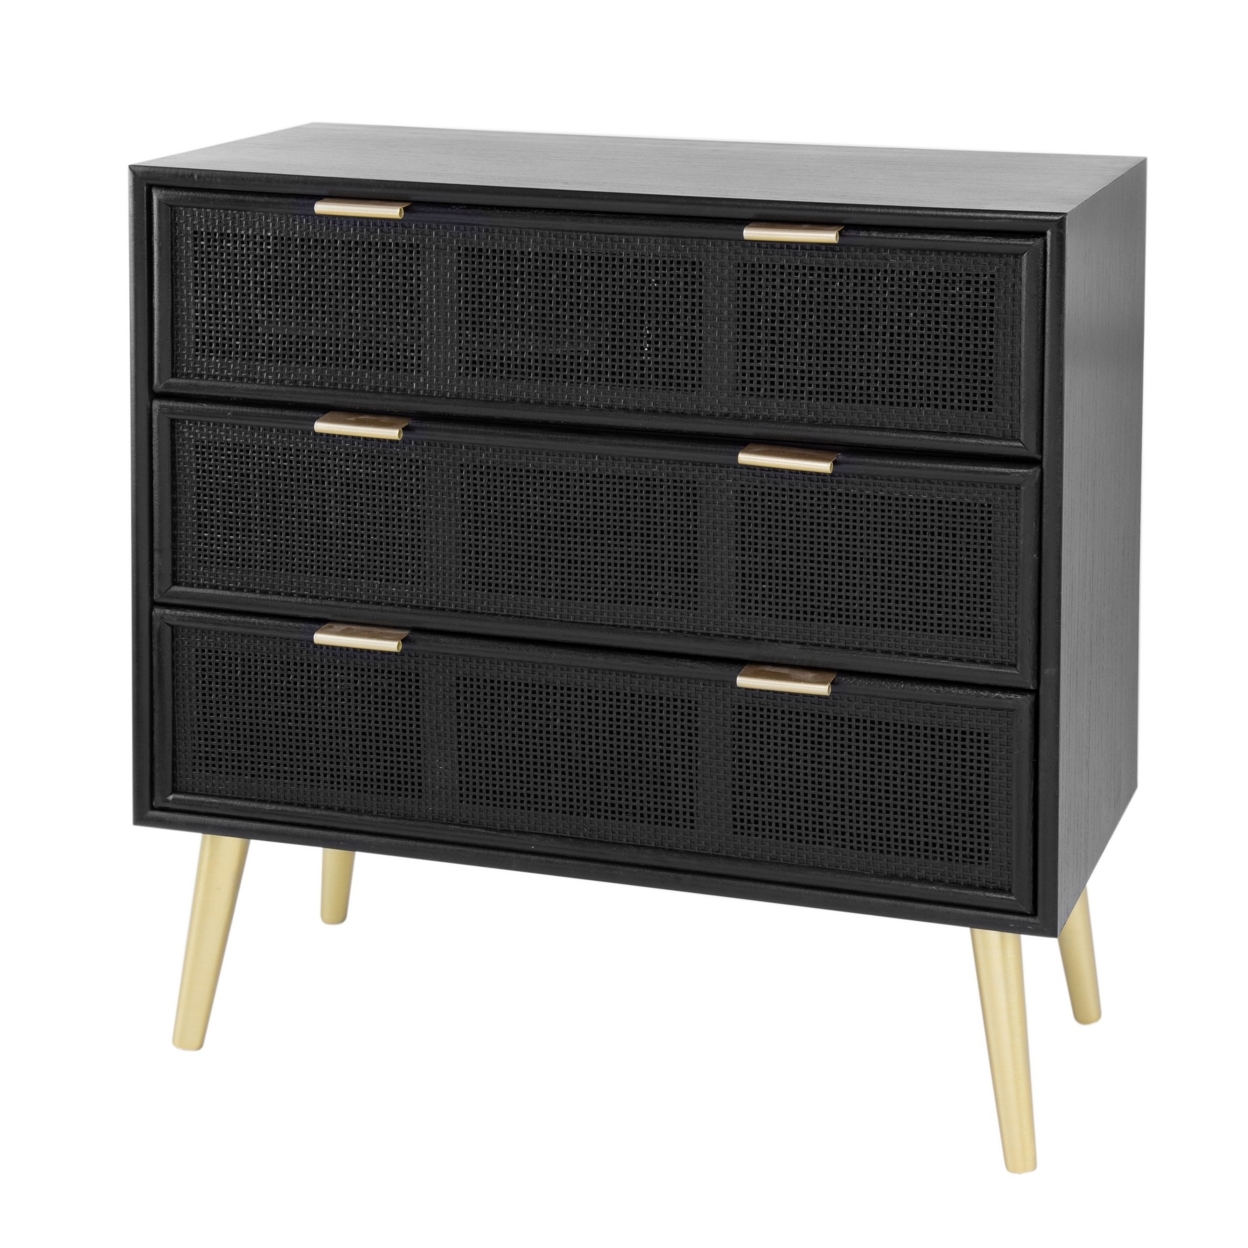 31 Inch Dresser Chest Cabinet, 3 Drawers, Woven Rattan, Modern, Black, Gold- Saltoro Sherpi